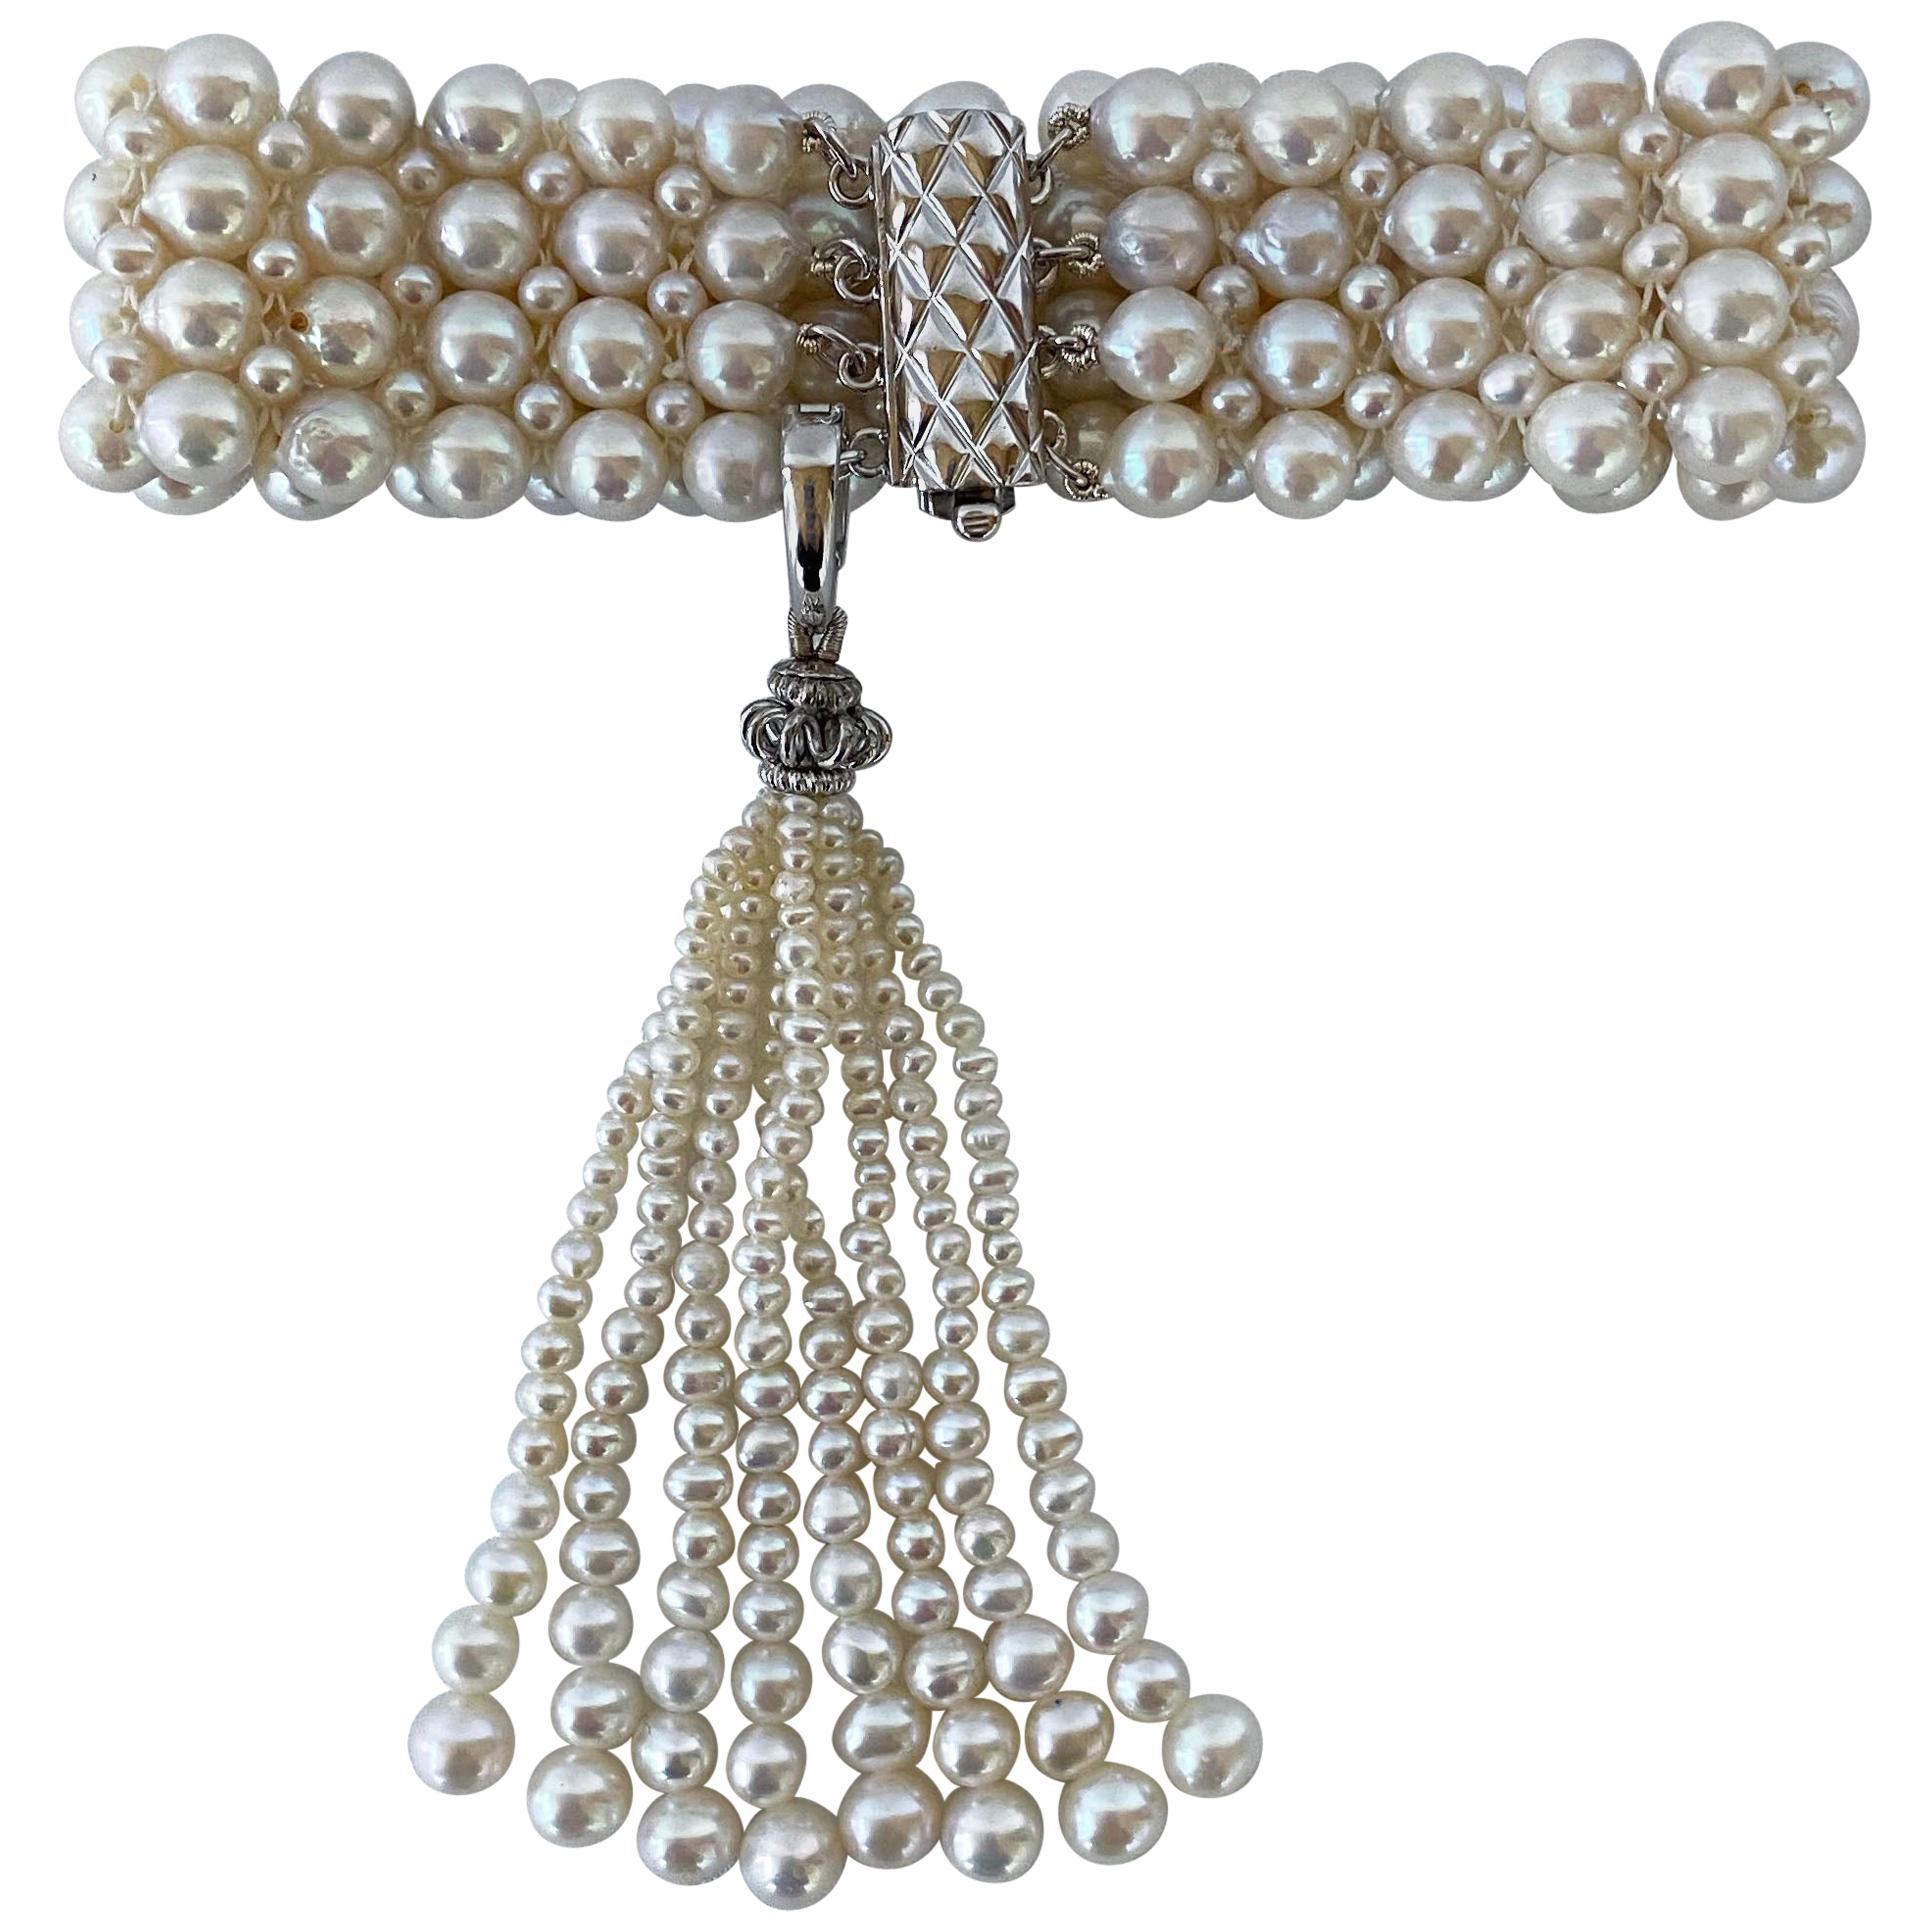 Marina J. "Art Deco" Inspired Woven Pearl Bracelet with Pearl Tassel